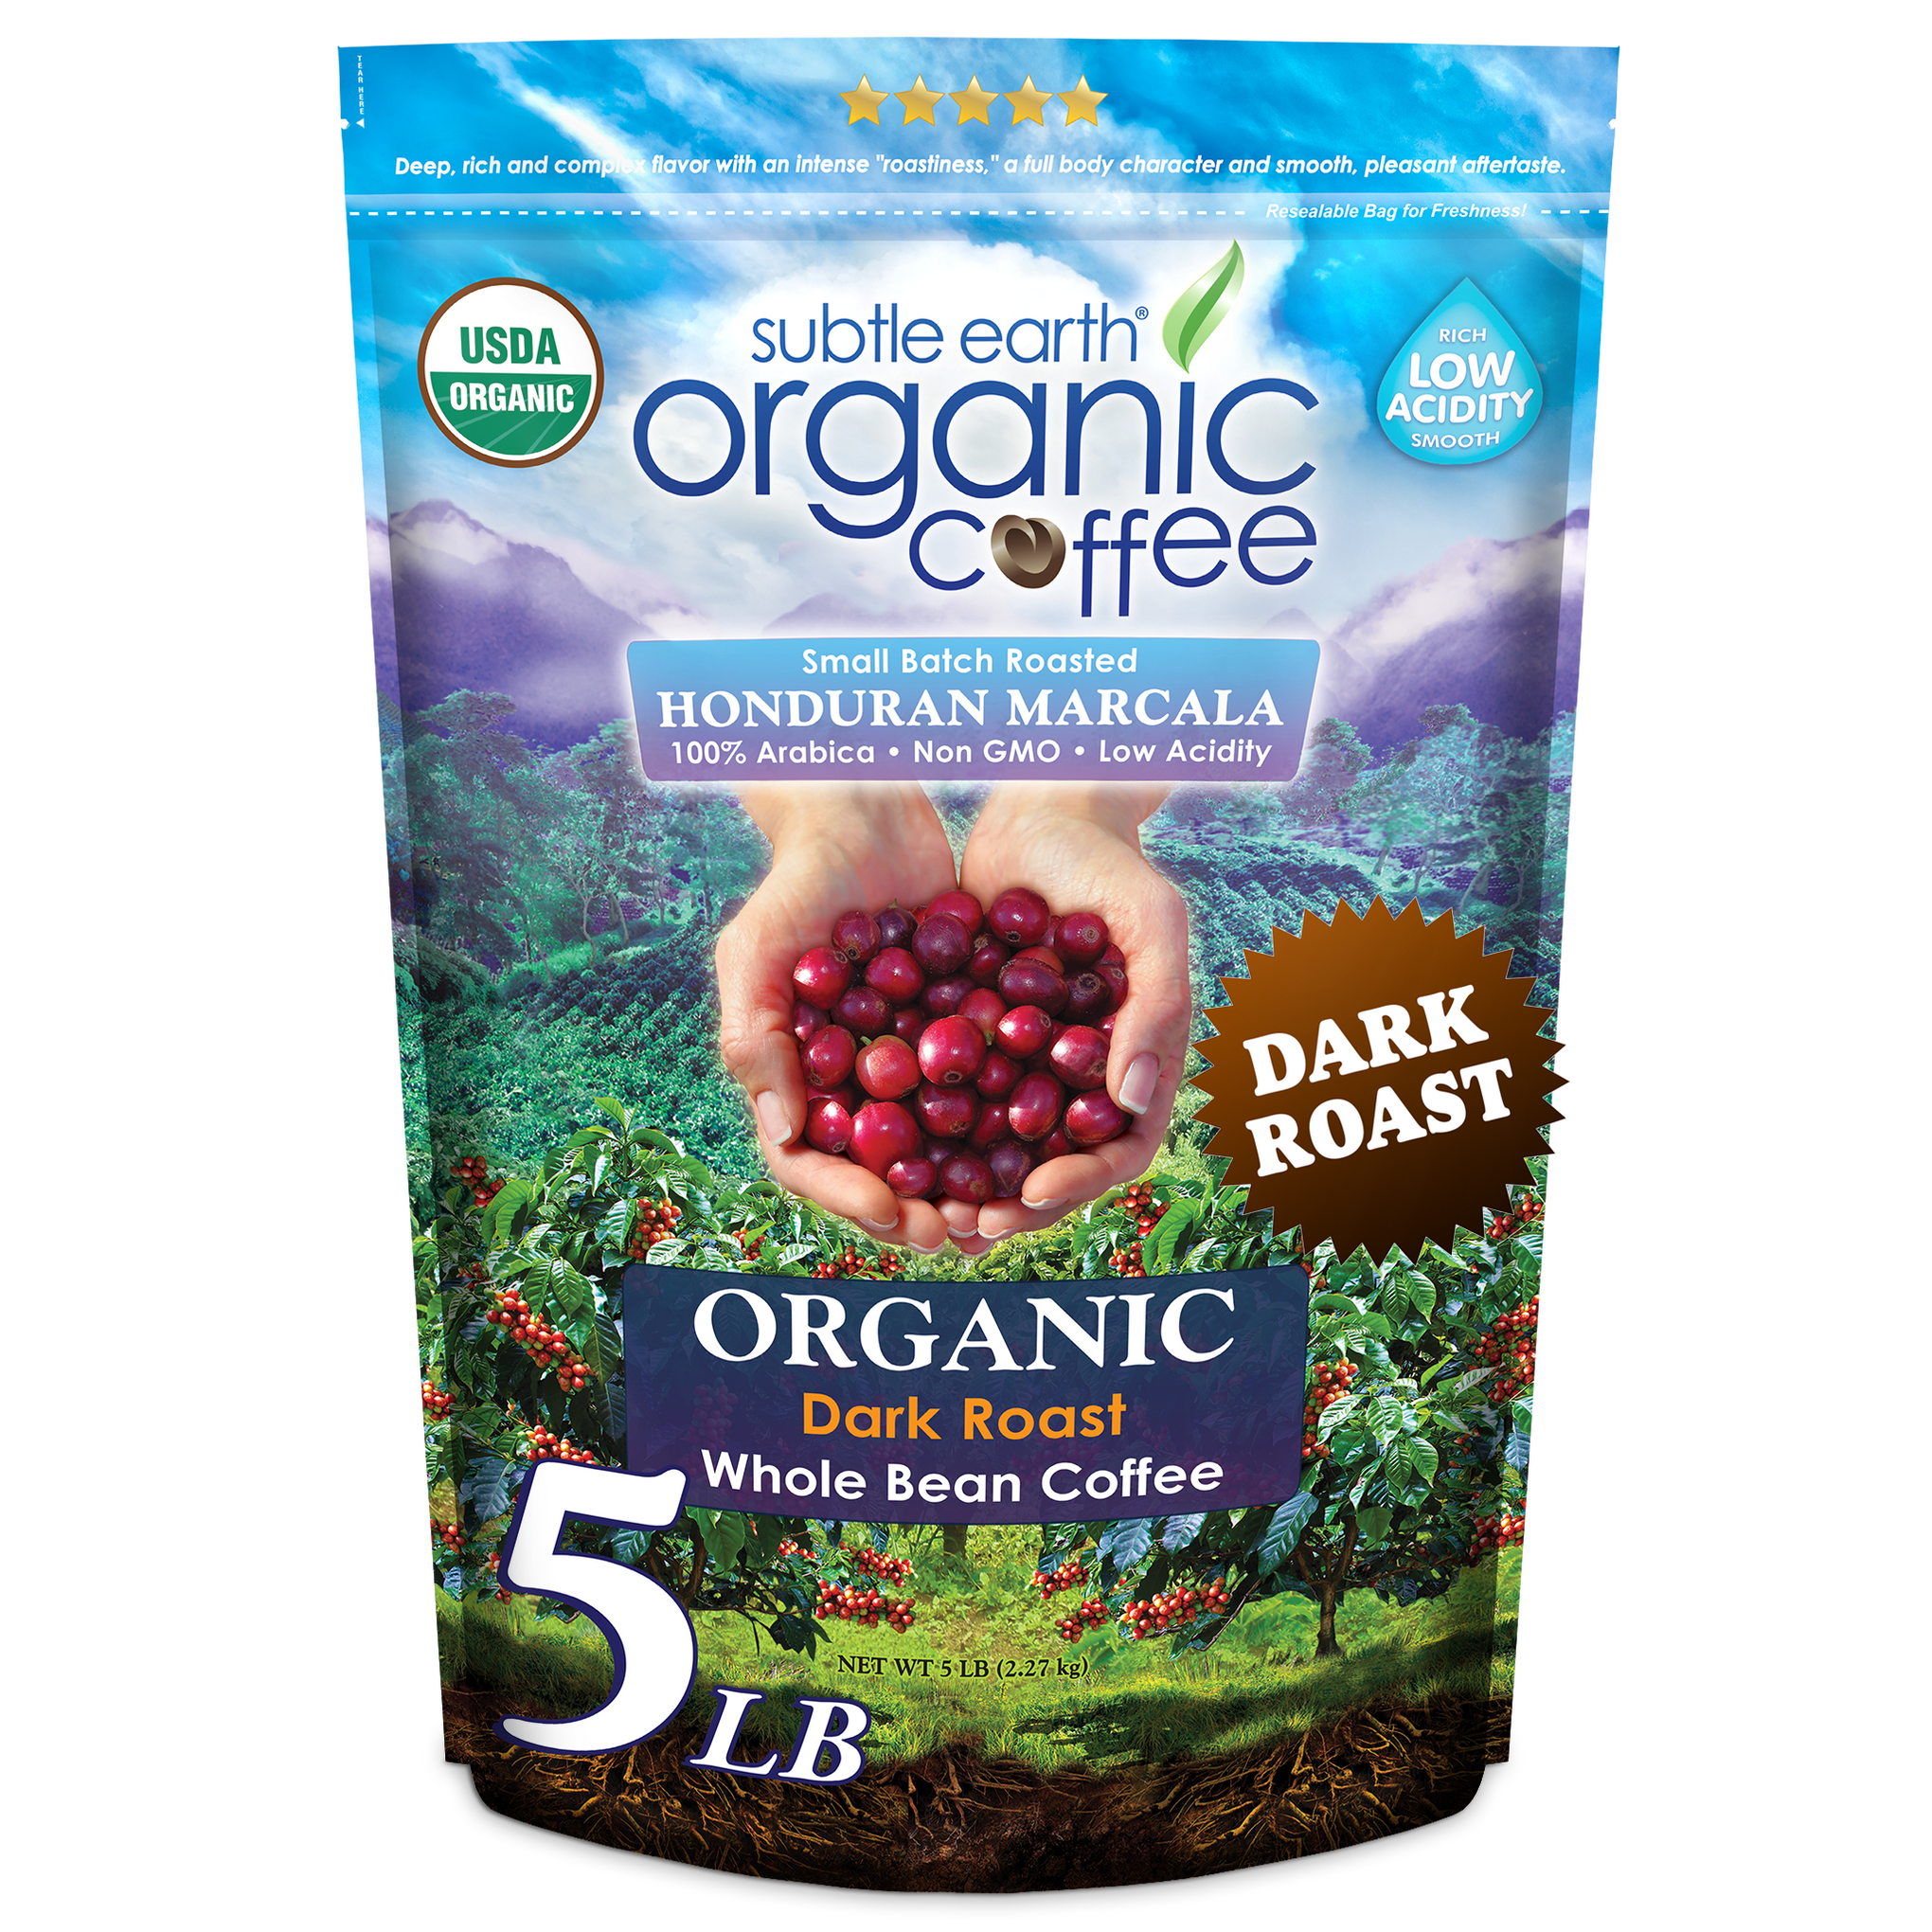 Subtle Earth Organic Dark Roast Coffee 5LB Bag hide